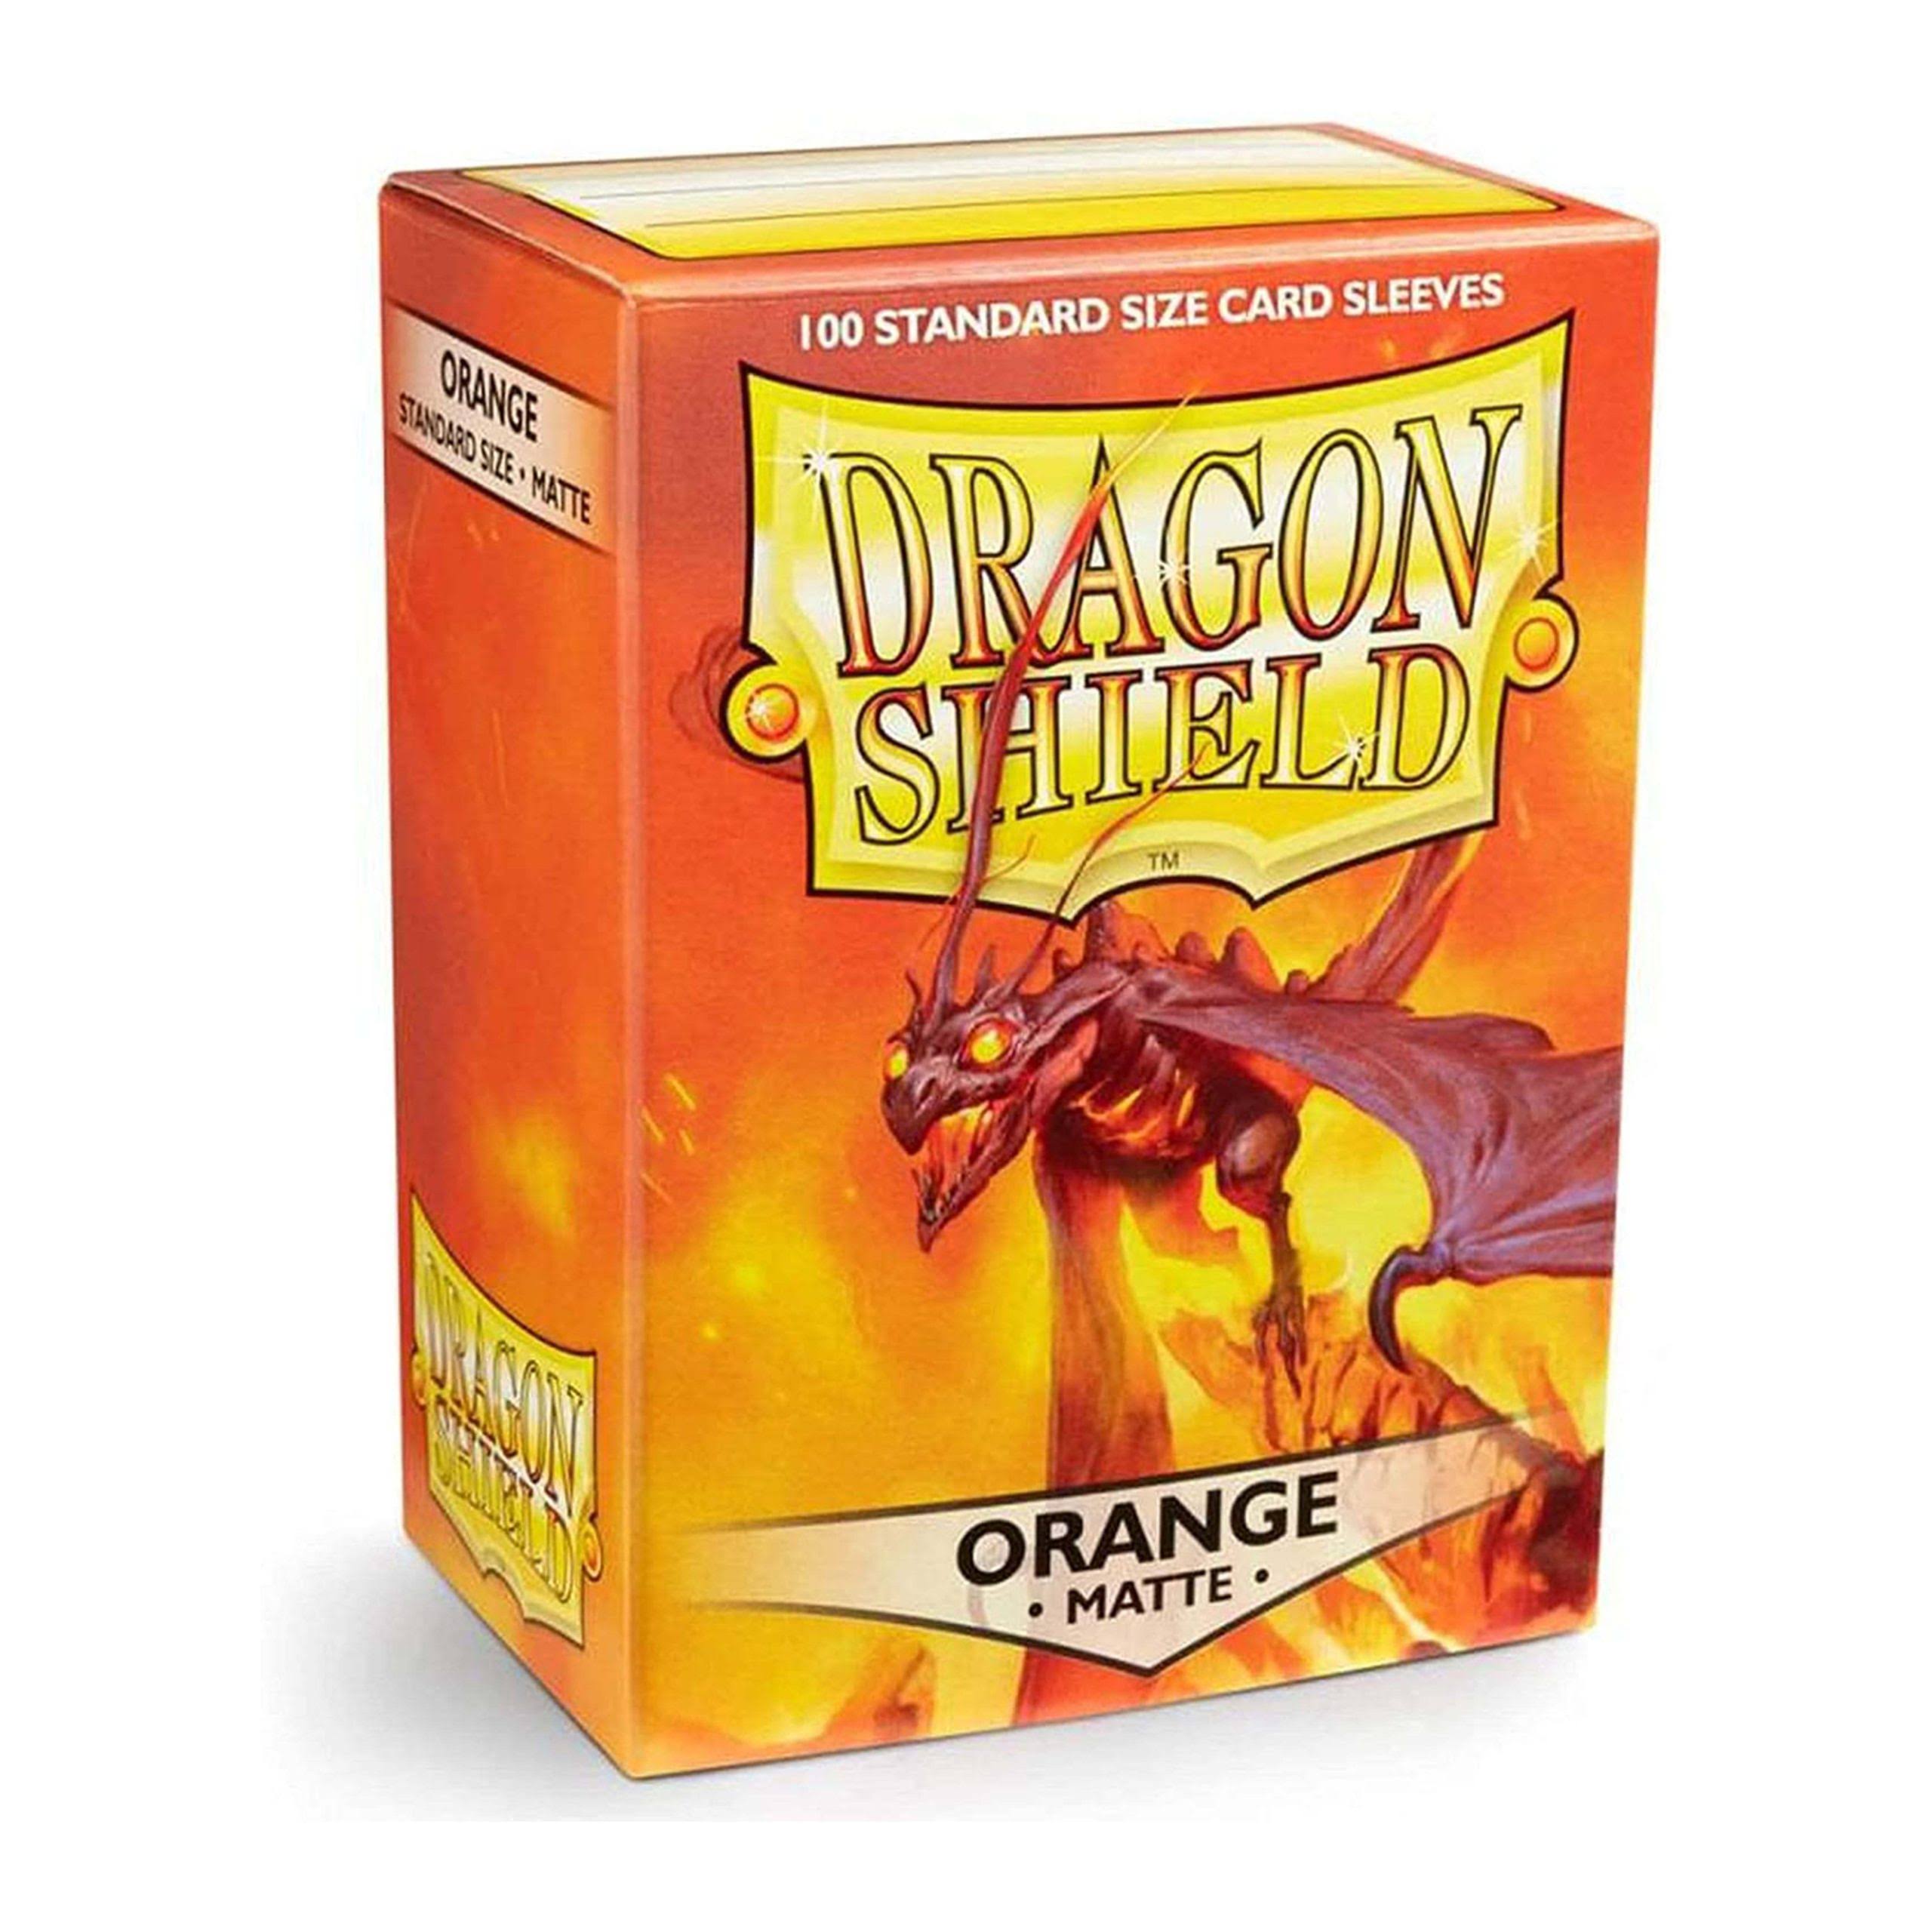 Dragon Shield Sleeves: Matte Orange, Box Of 100